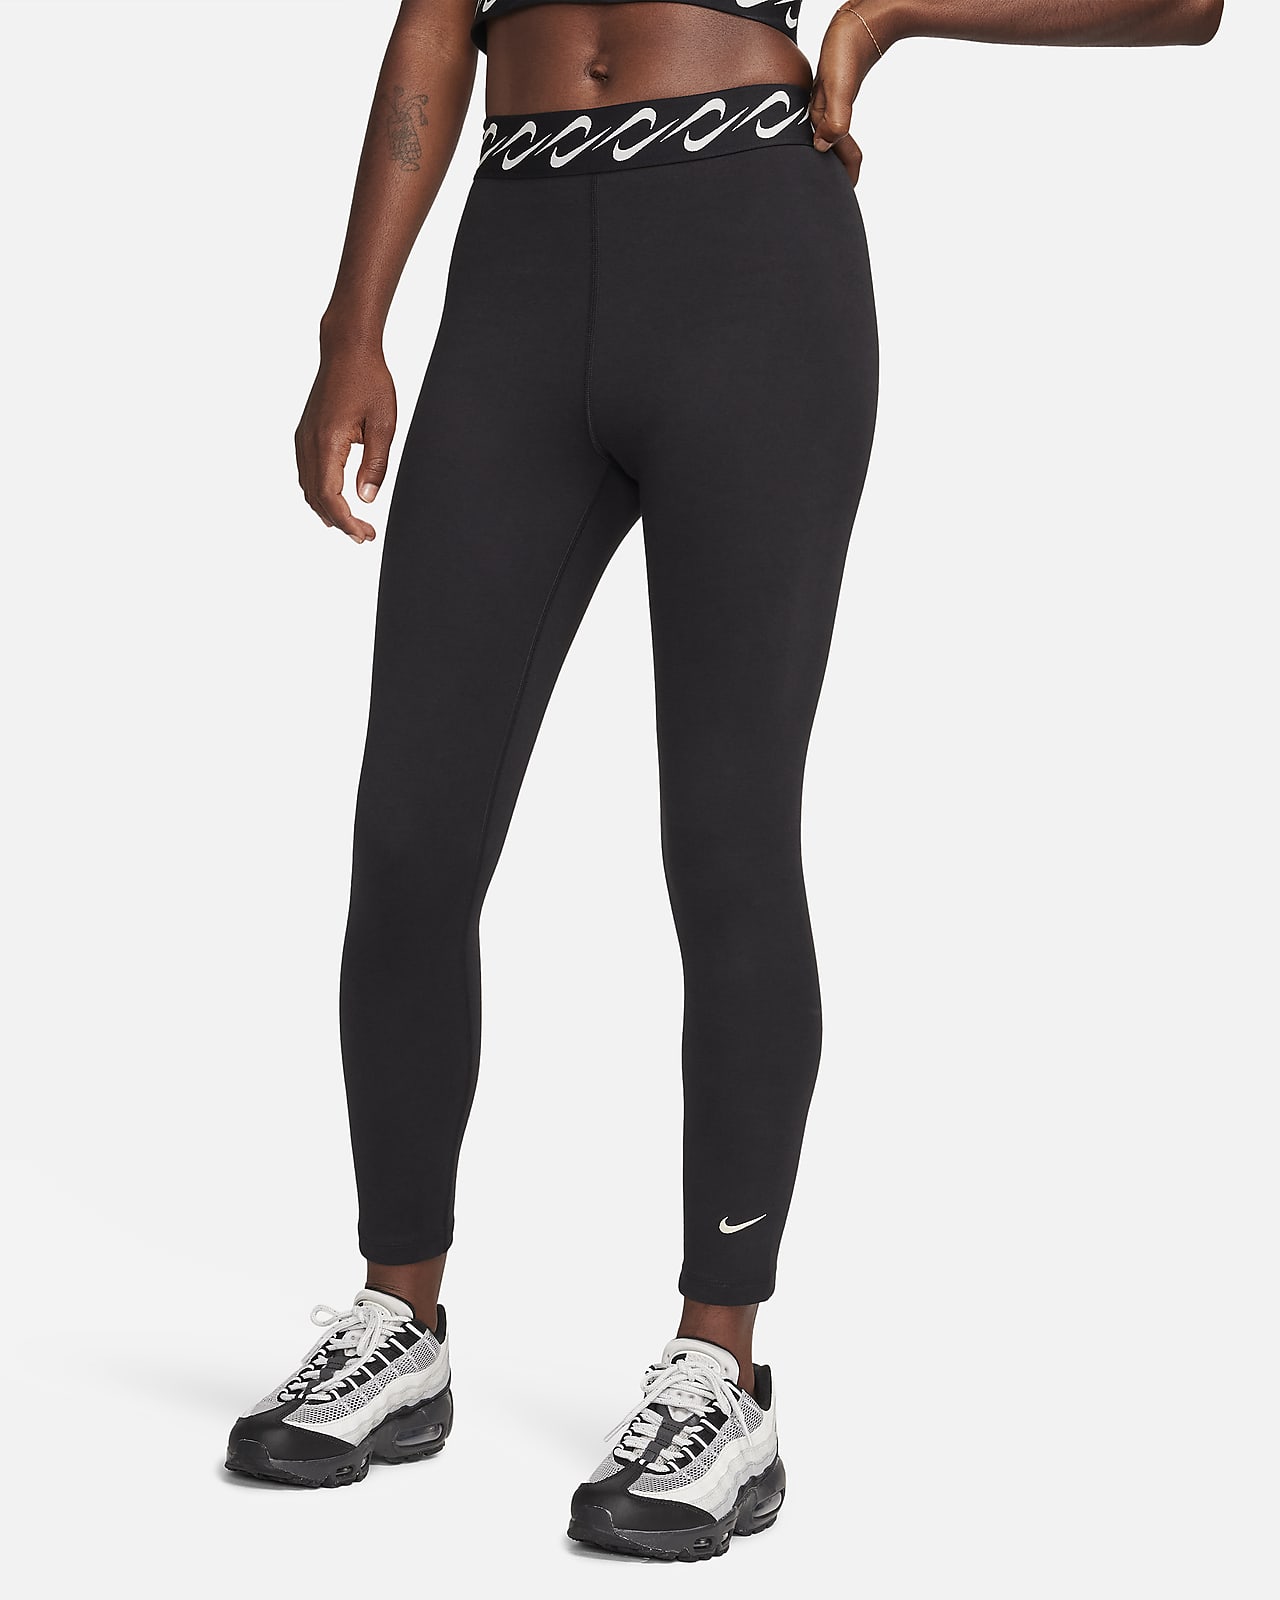 Nike Sportswear Classic Swoosh Women's High-Waisted 7/8 Leggings.